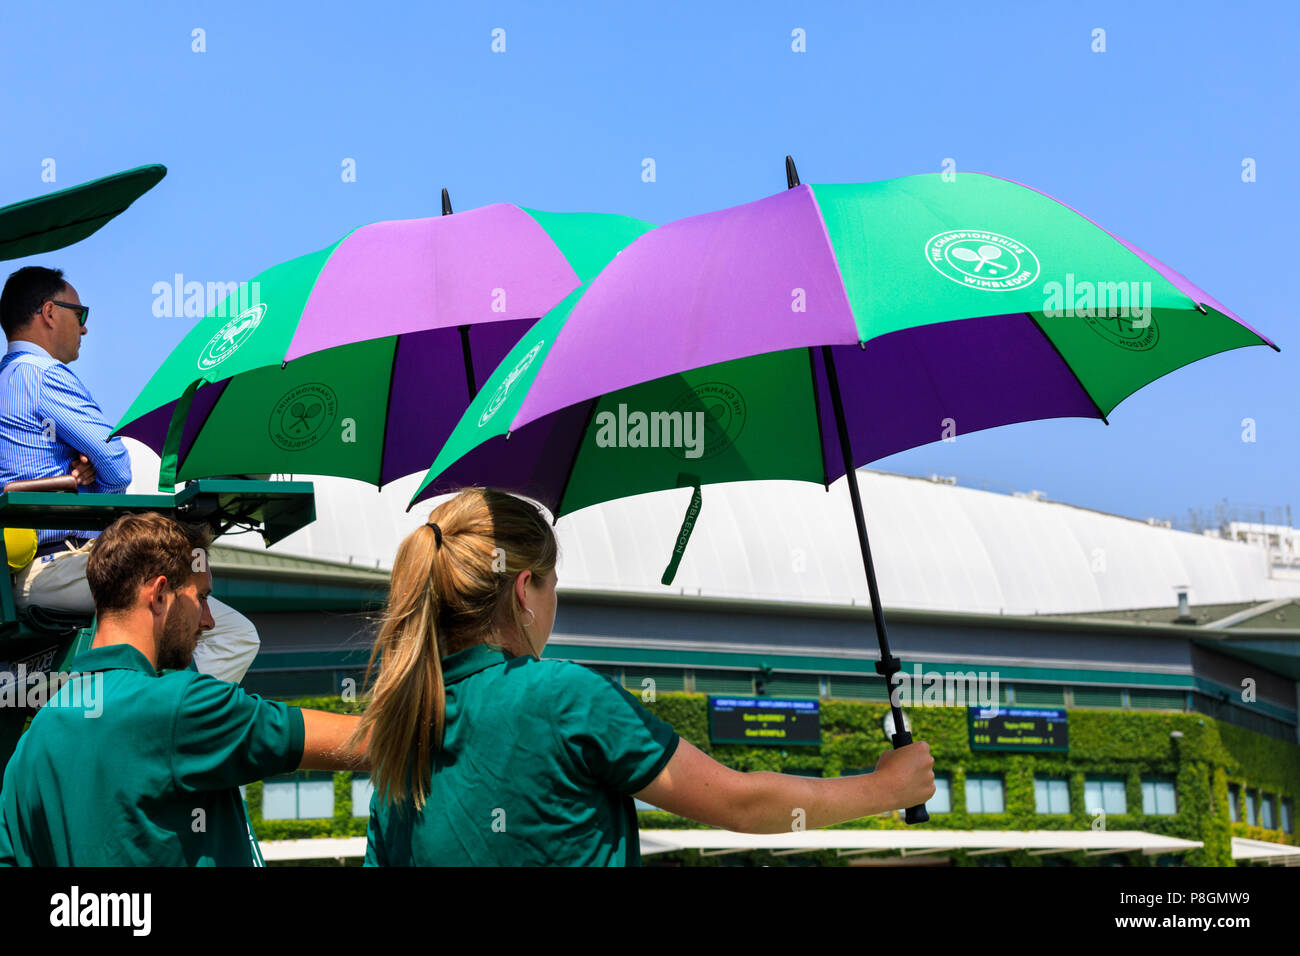 Wimbledon court attendants holding umbrellas above players for shade, All England Lawn Tennis Club Wimbledon, UK Stock Photo